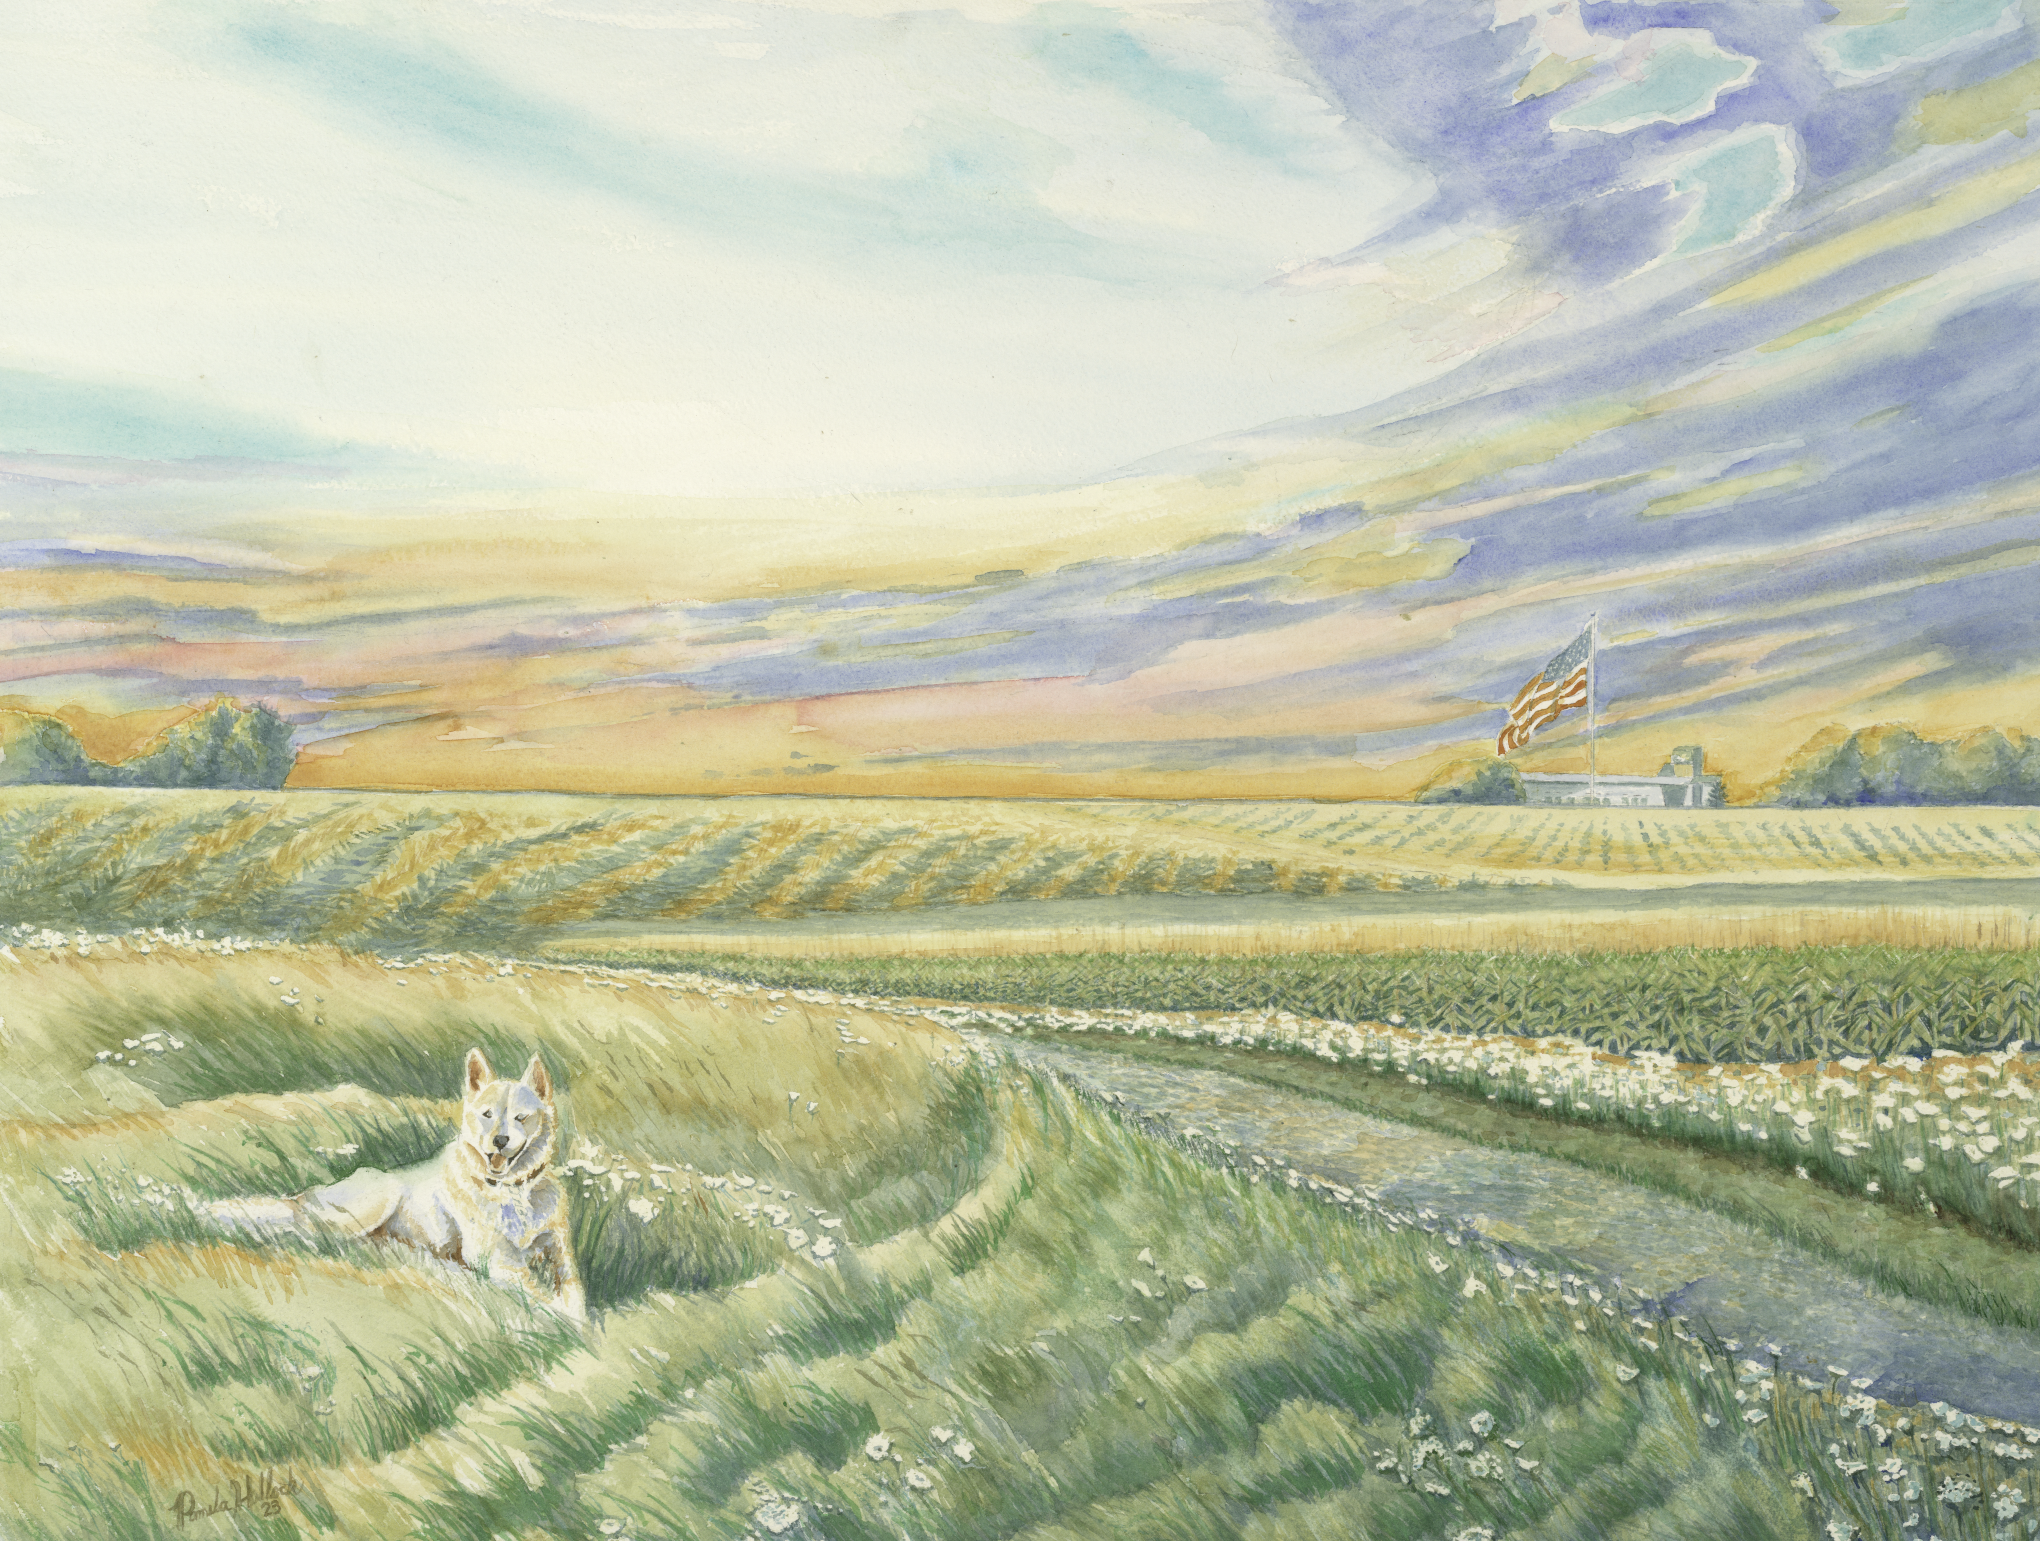 Midwest Corn Fields, Watercolor Print